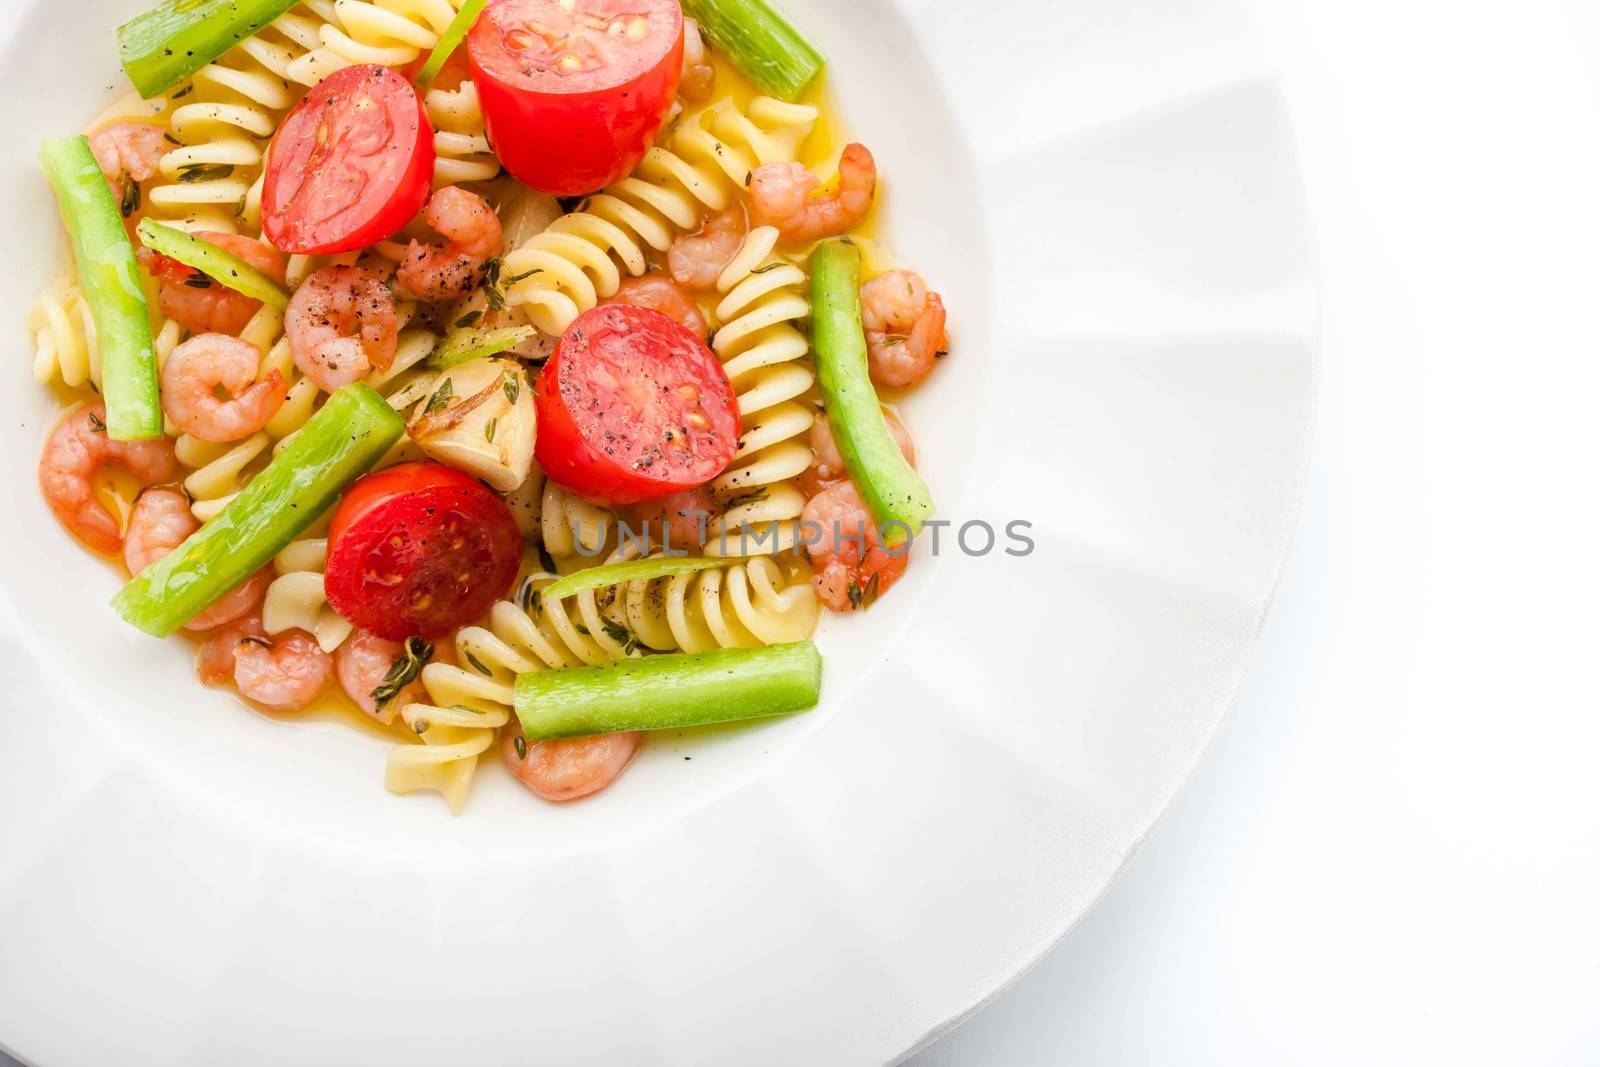 Pasta with vegetables and prawns by Deniskarpenkov